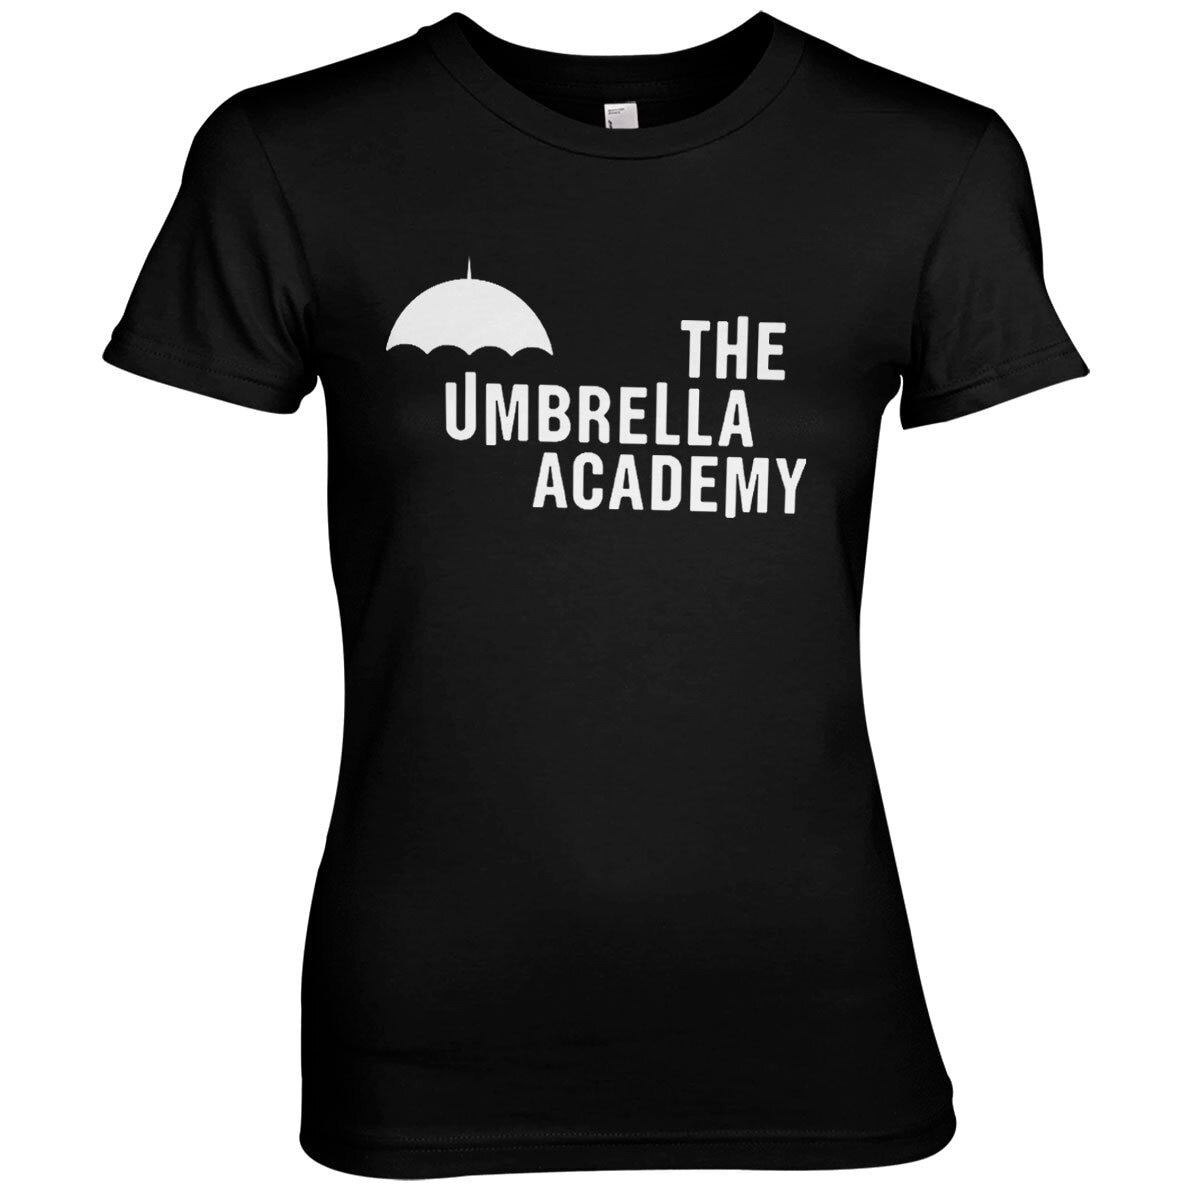 The Umbrella Academy Girly Tee